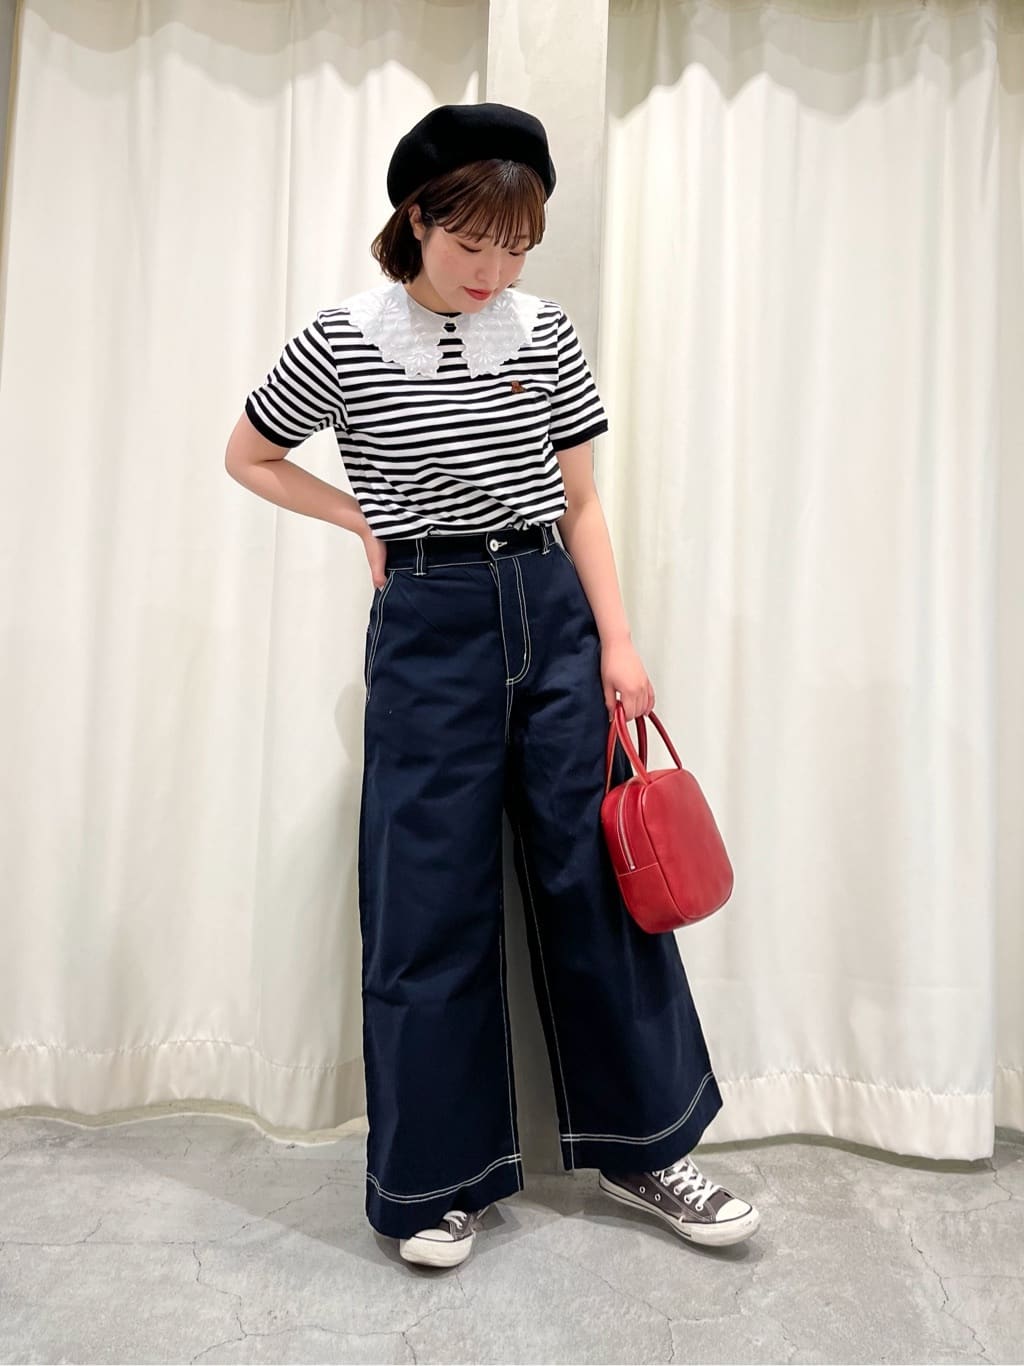 Dot and Stripes CHILD WOMAN CHILD WOMAN , PAR ICI 新宿ミロード 身長：160cm 2022.04.30